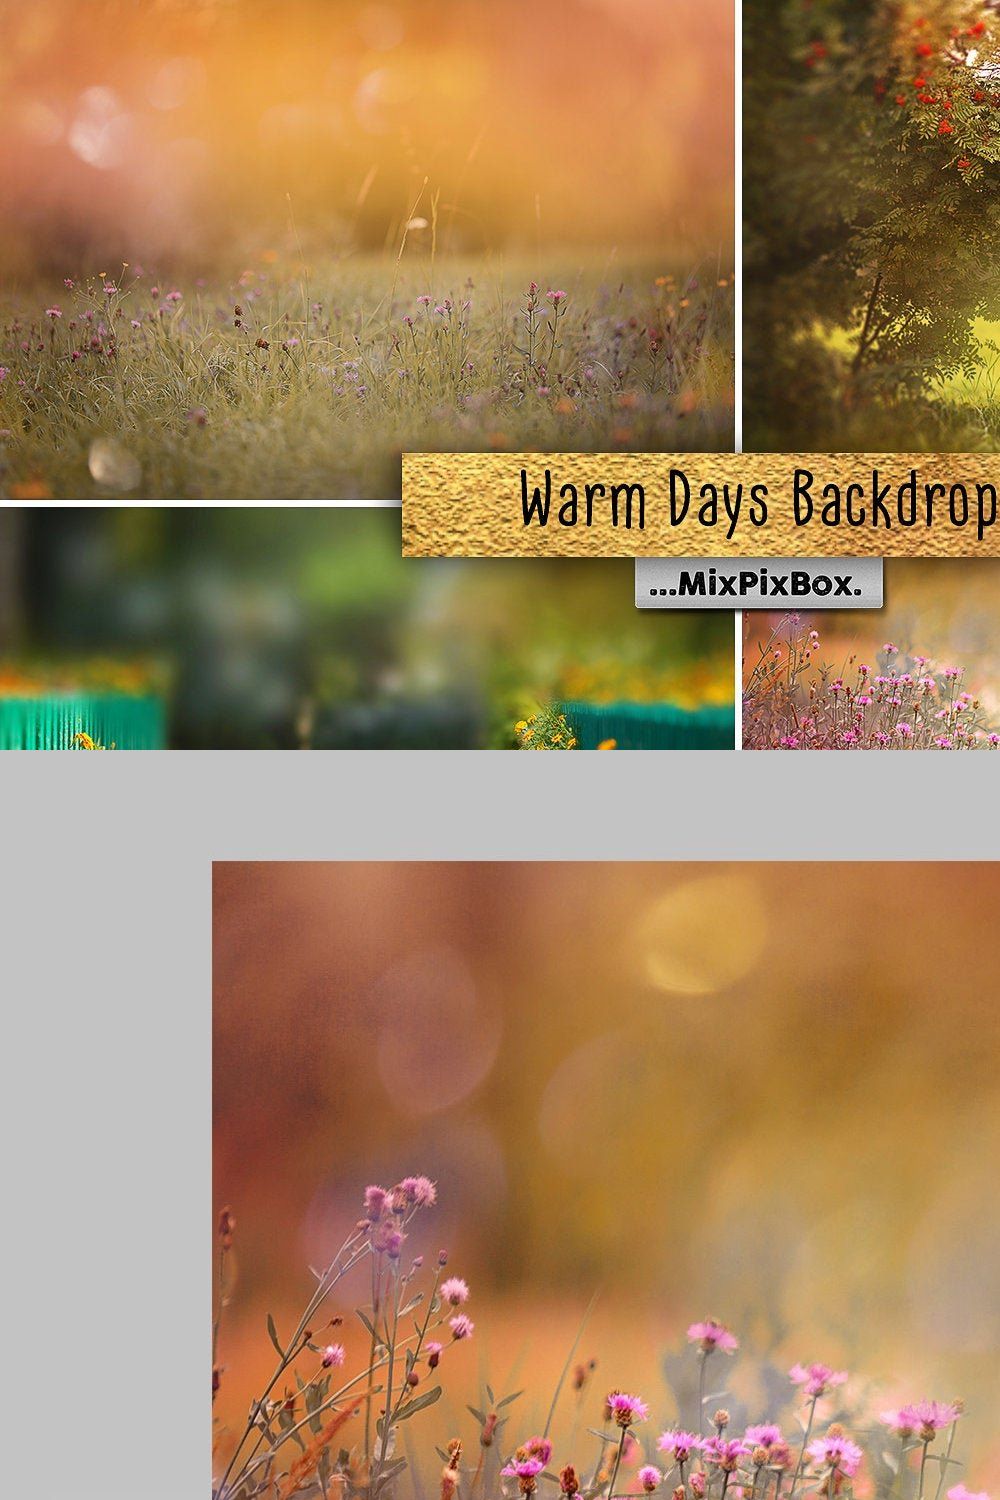 Warm Days Backdrop pinterest preview image.